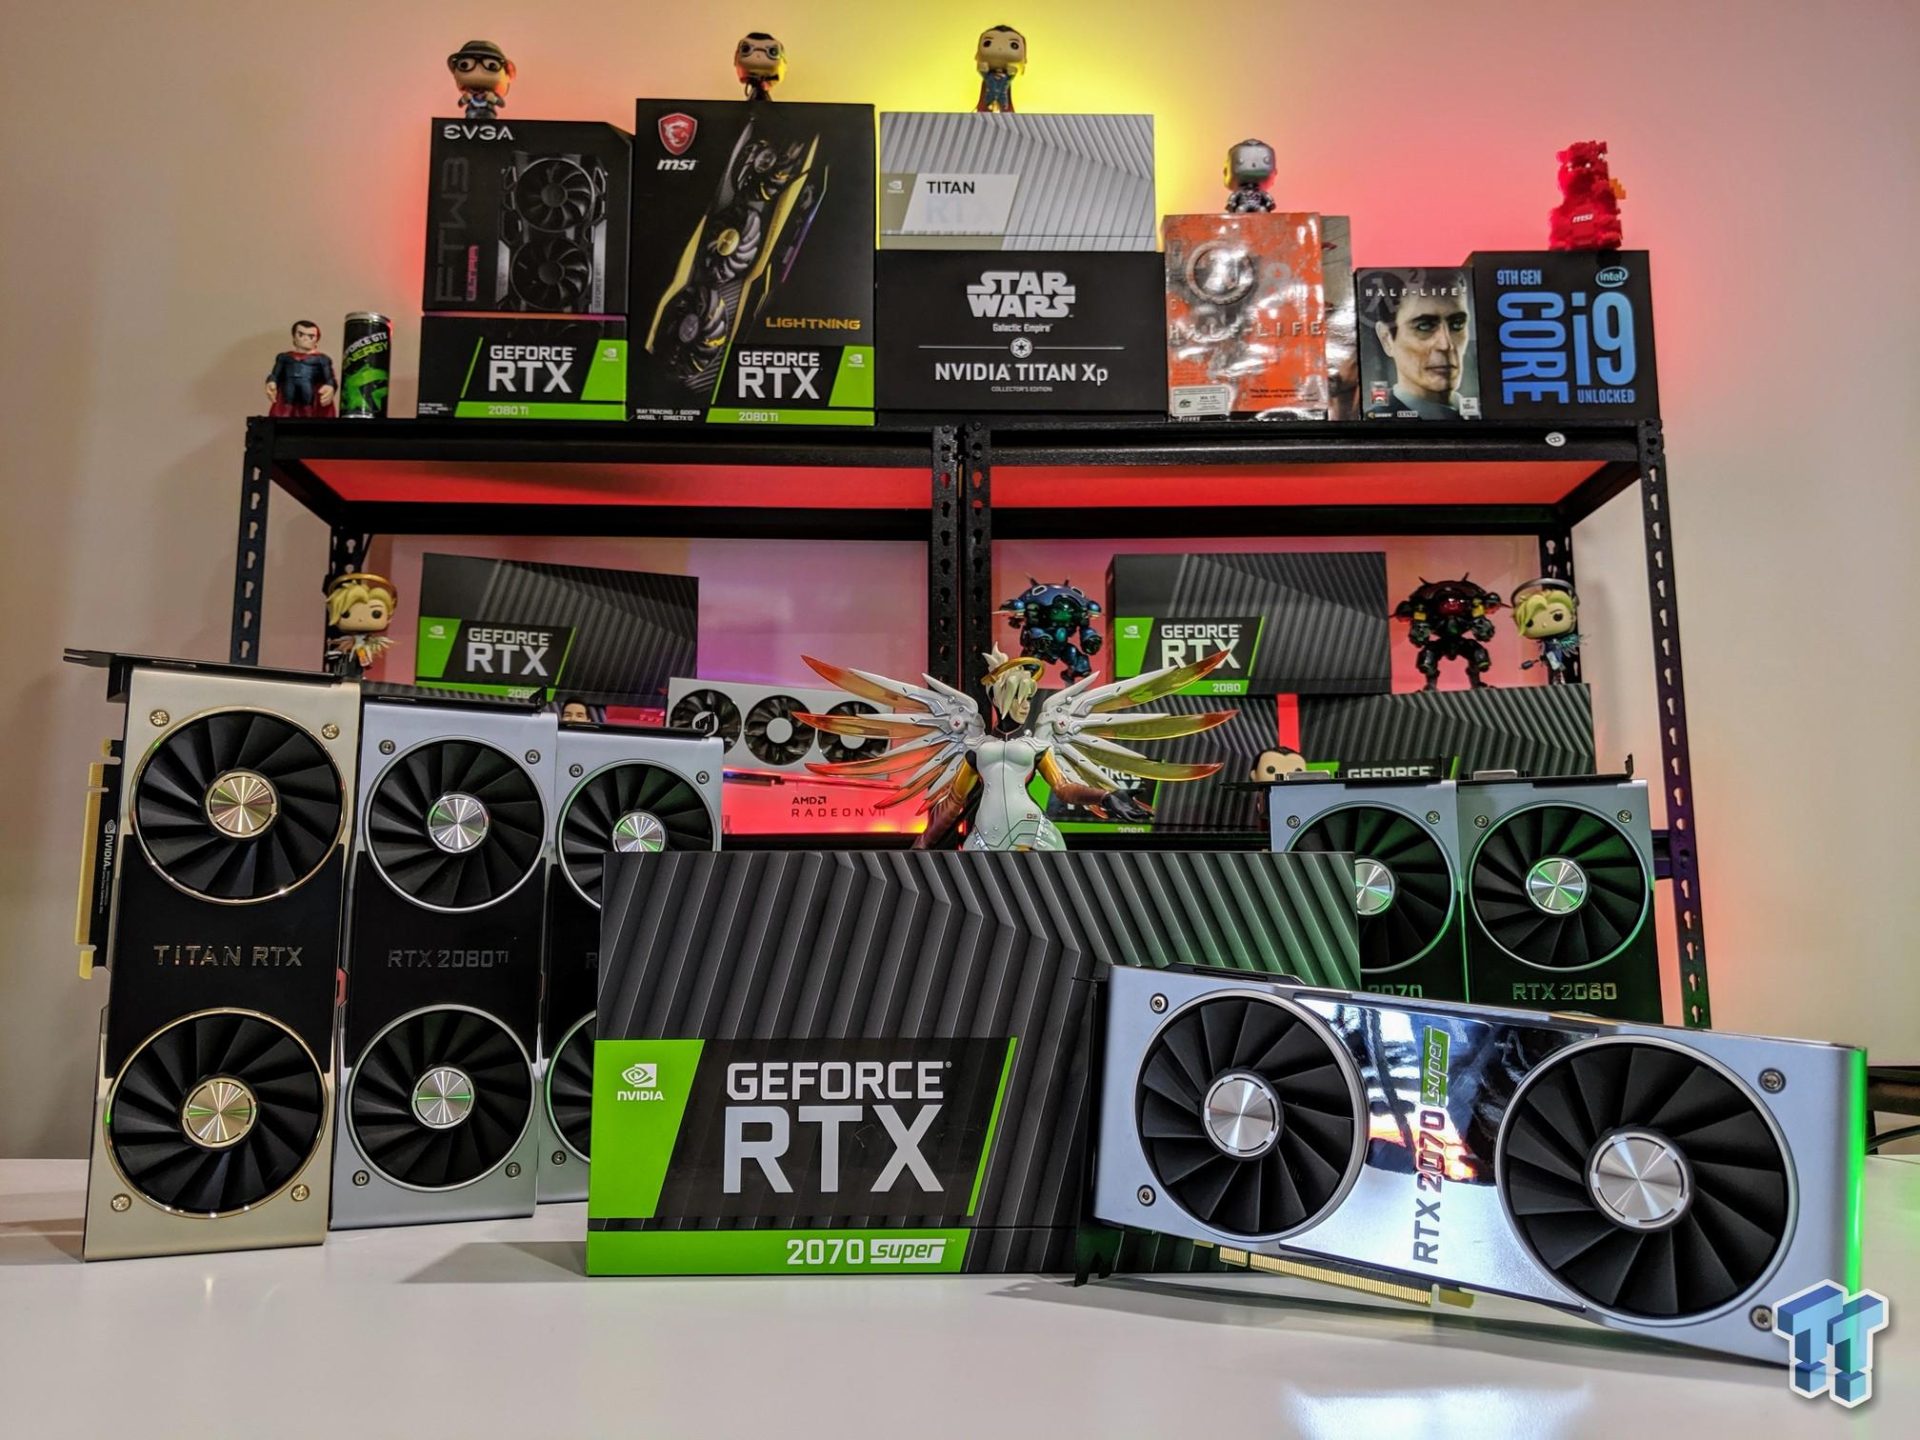 Nvidia RTX 2070 SUPER features SLI integration to leverage multi GPU performance